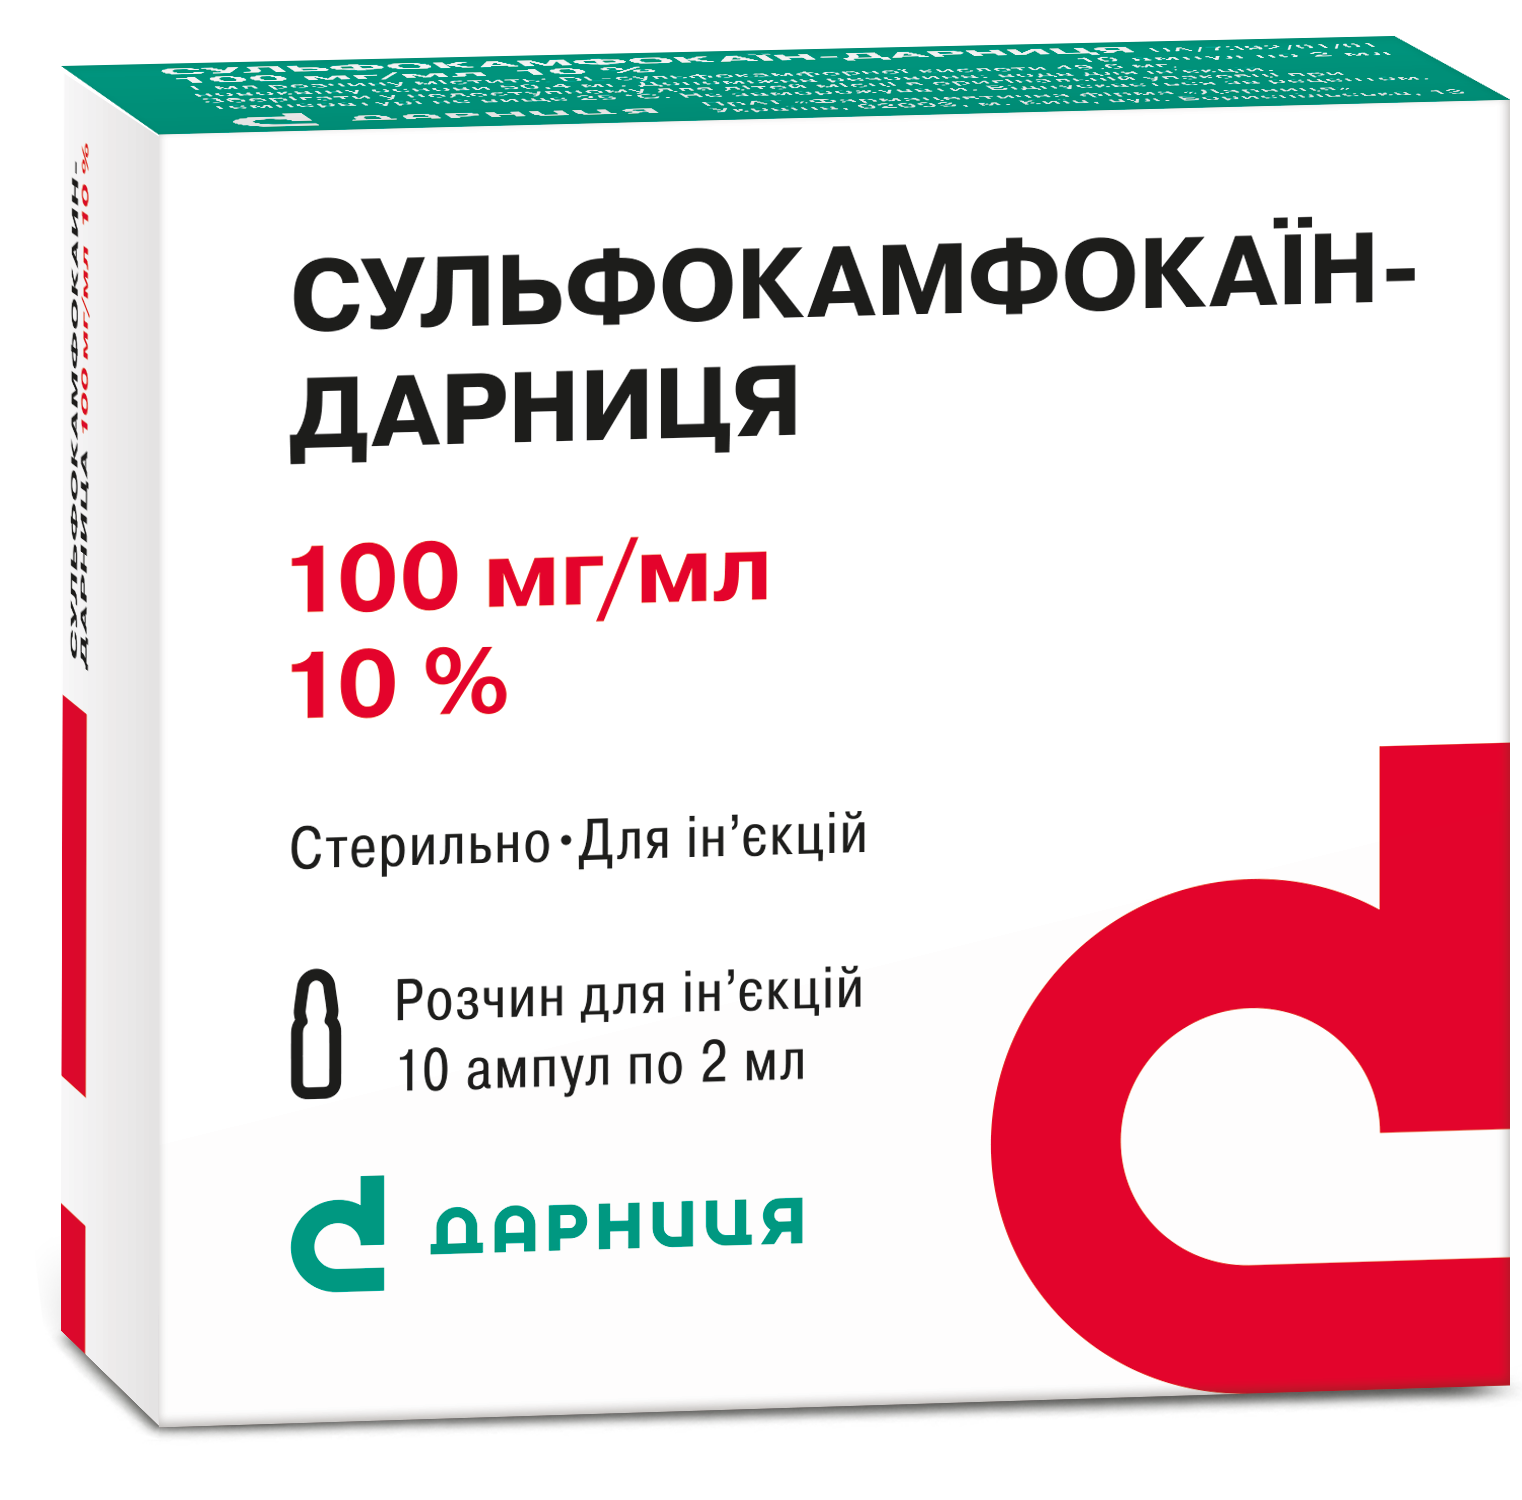 Sulfocamphocaine-Darnitsa